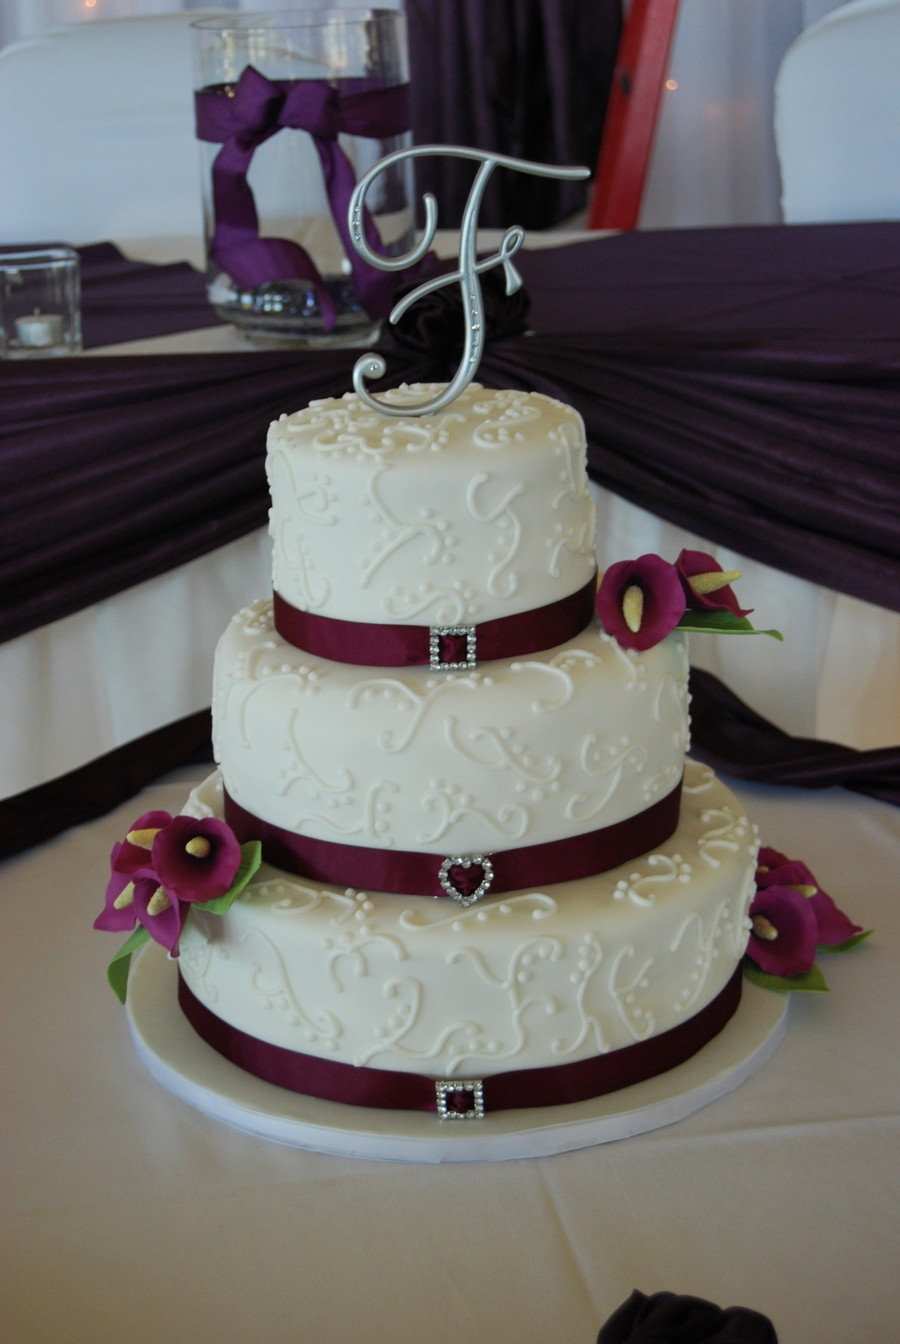 Wedding Cakes With Calla Lilies
 Calla Lily Wedding Cake CakeCentral